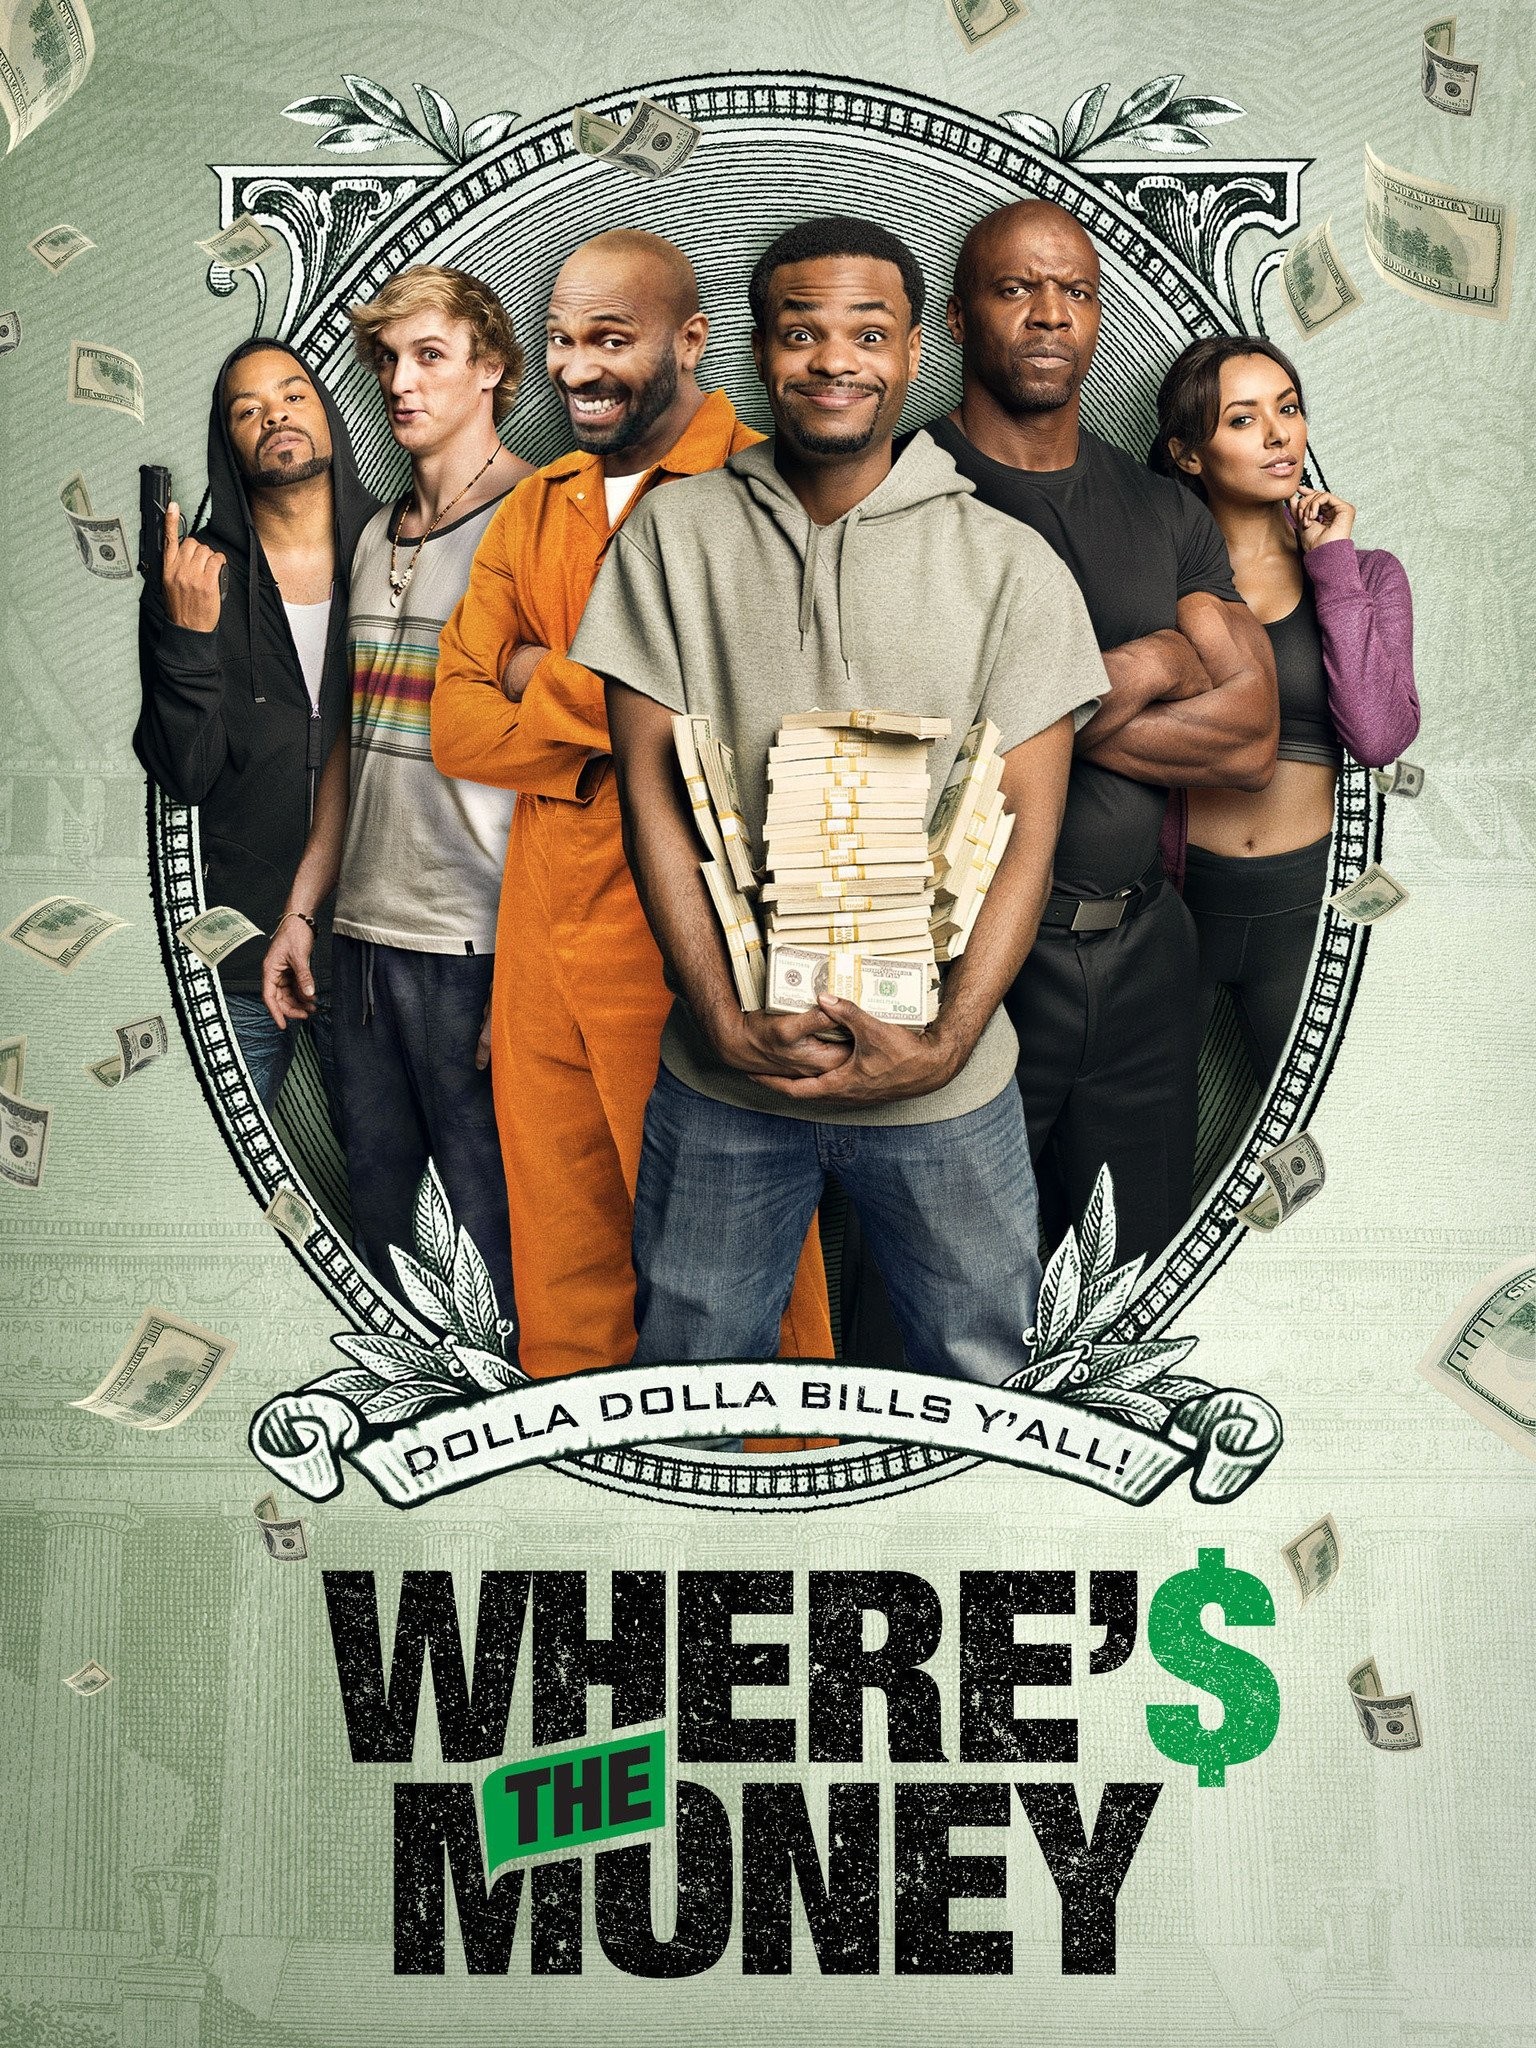 Where's the Money (2017)